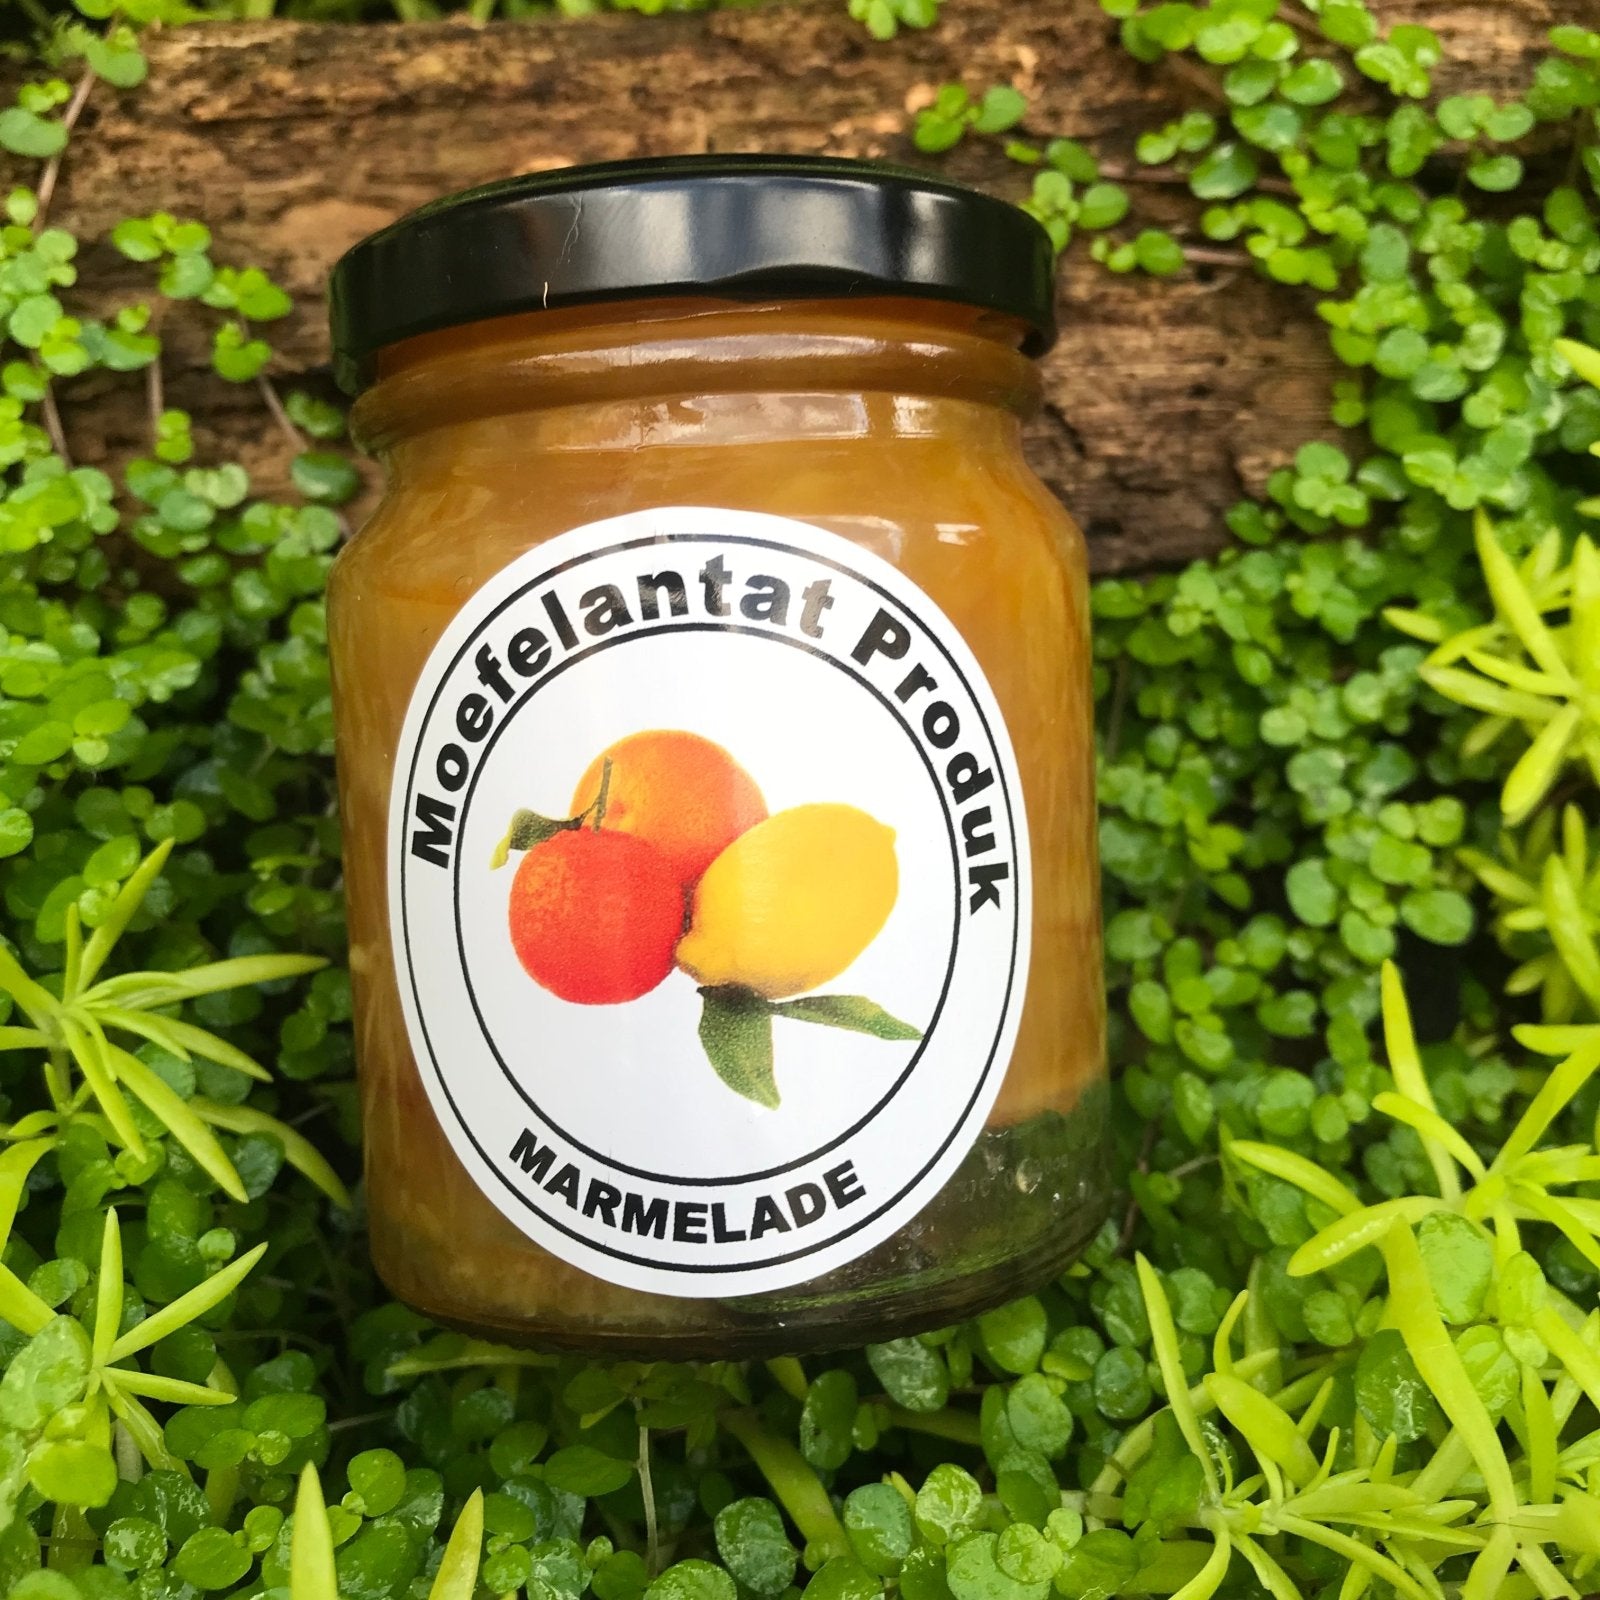 Moefelantat Marmalade Jam (125g) - The Deli